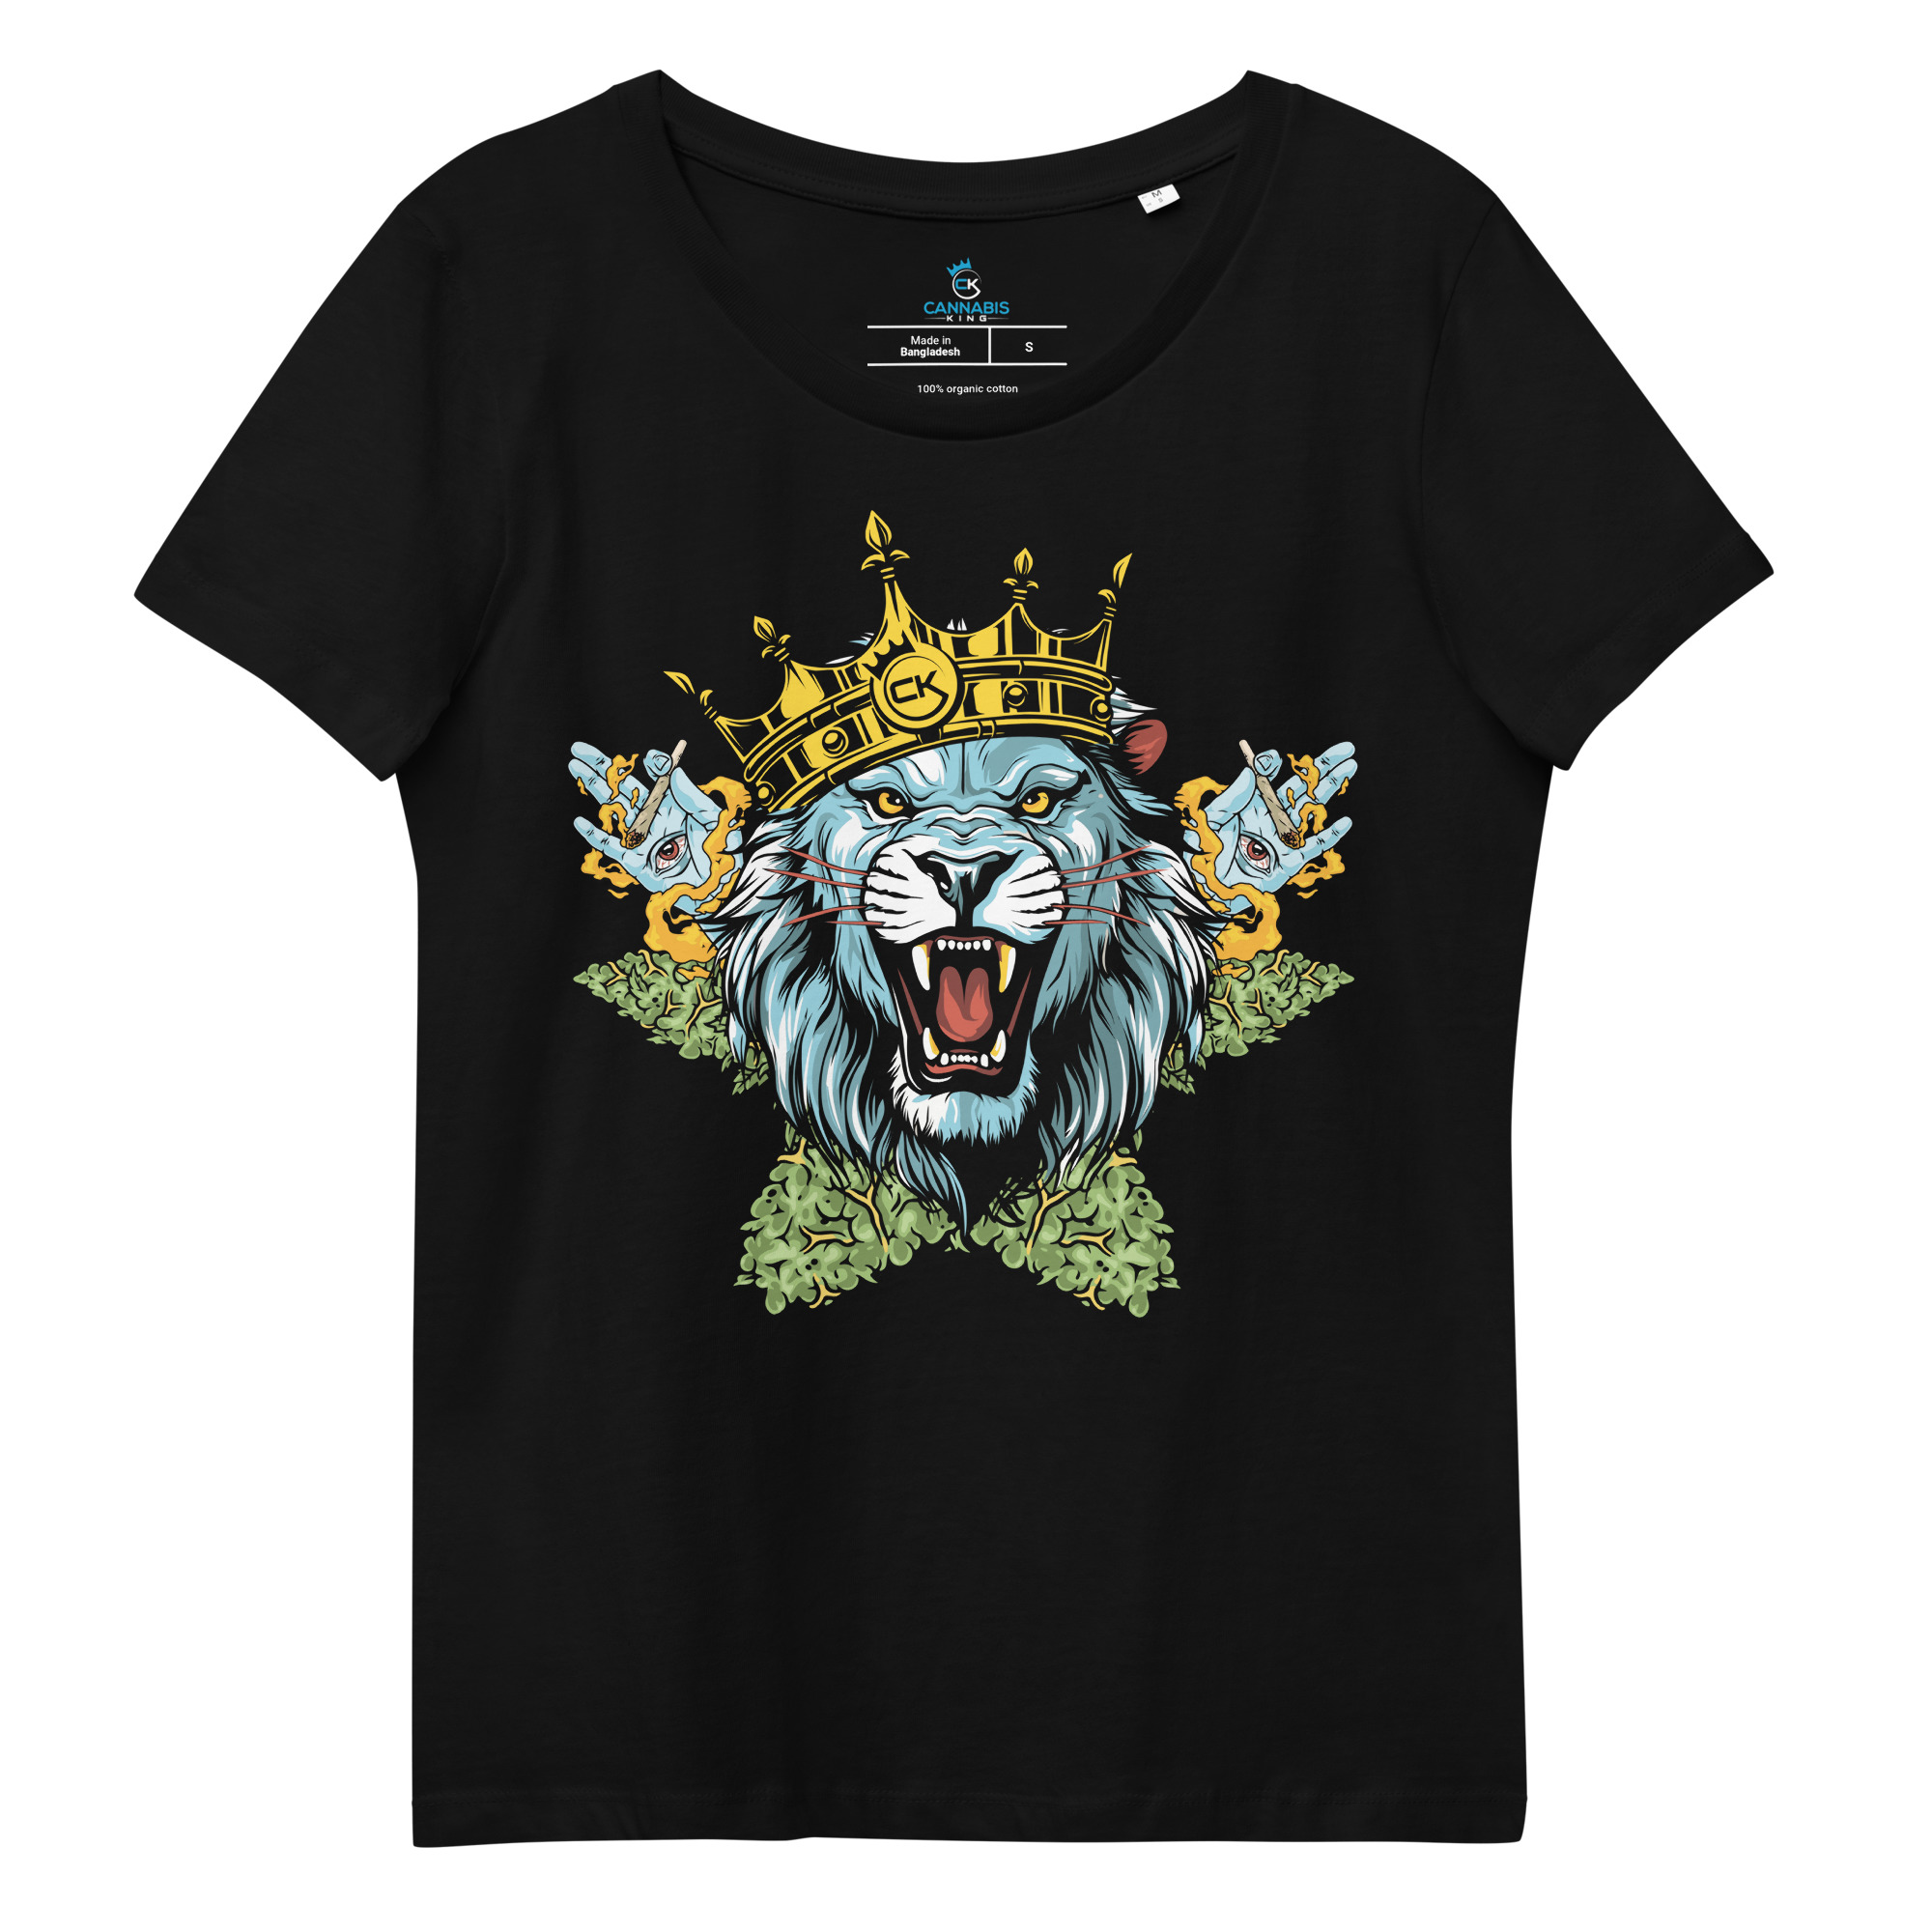 T-shirt femme – Cannabis King – Modèle Exclusif Cannamix King Vol°1 par DJ Shoobong T-shirts Wearyt